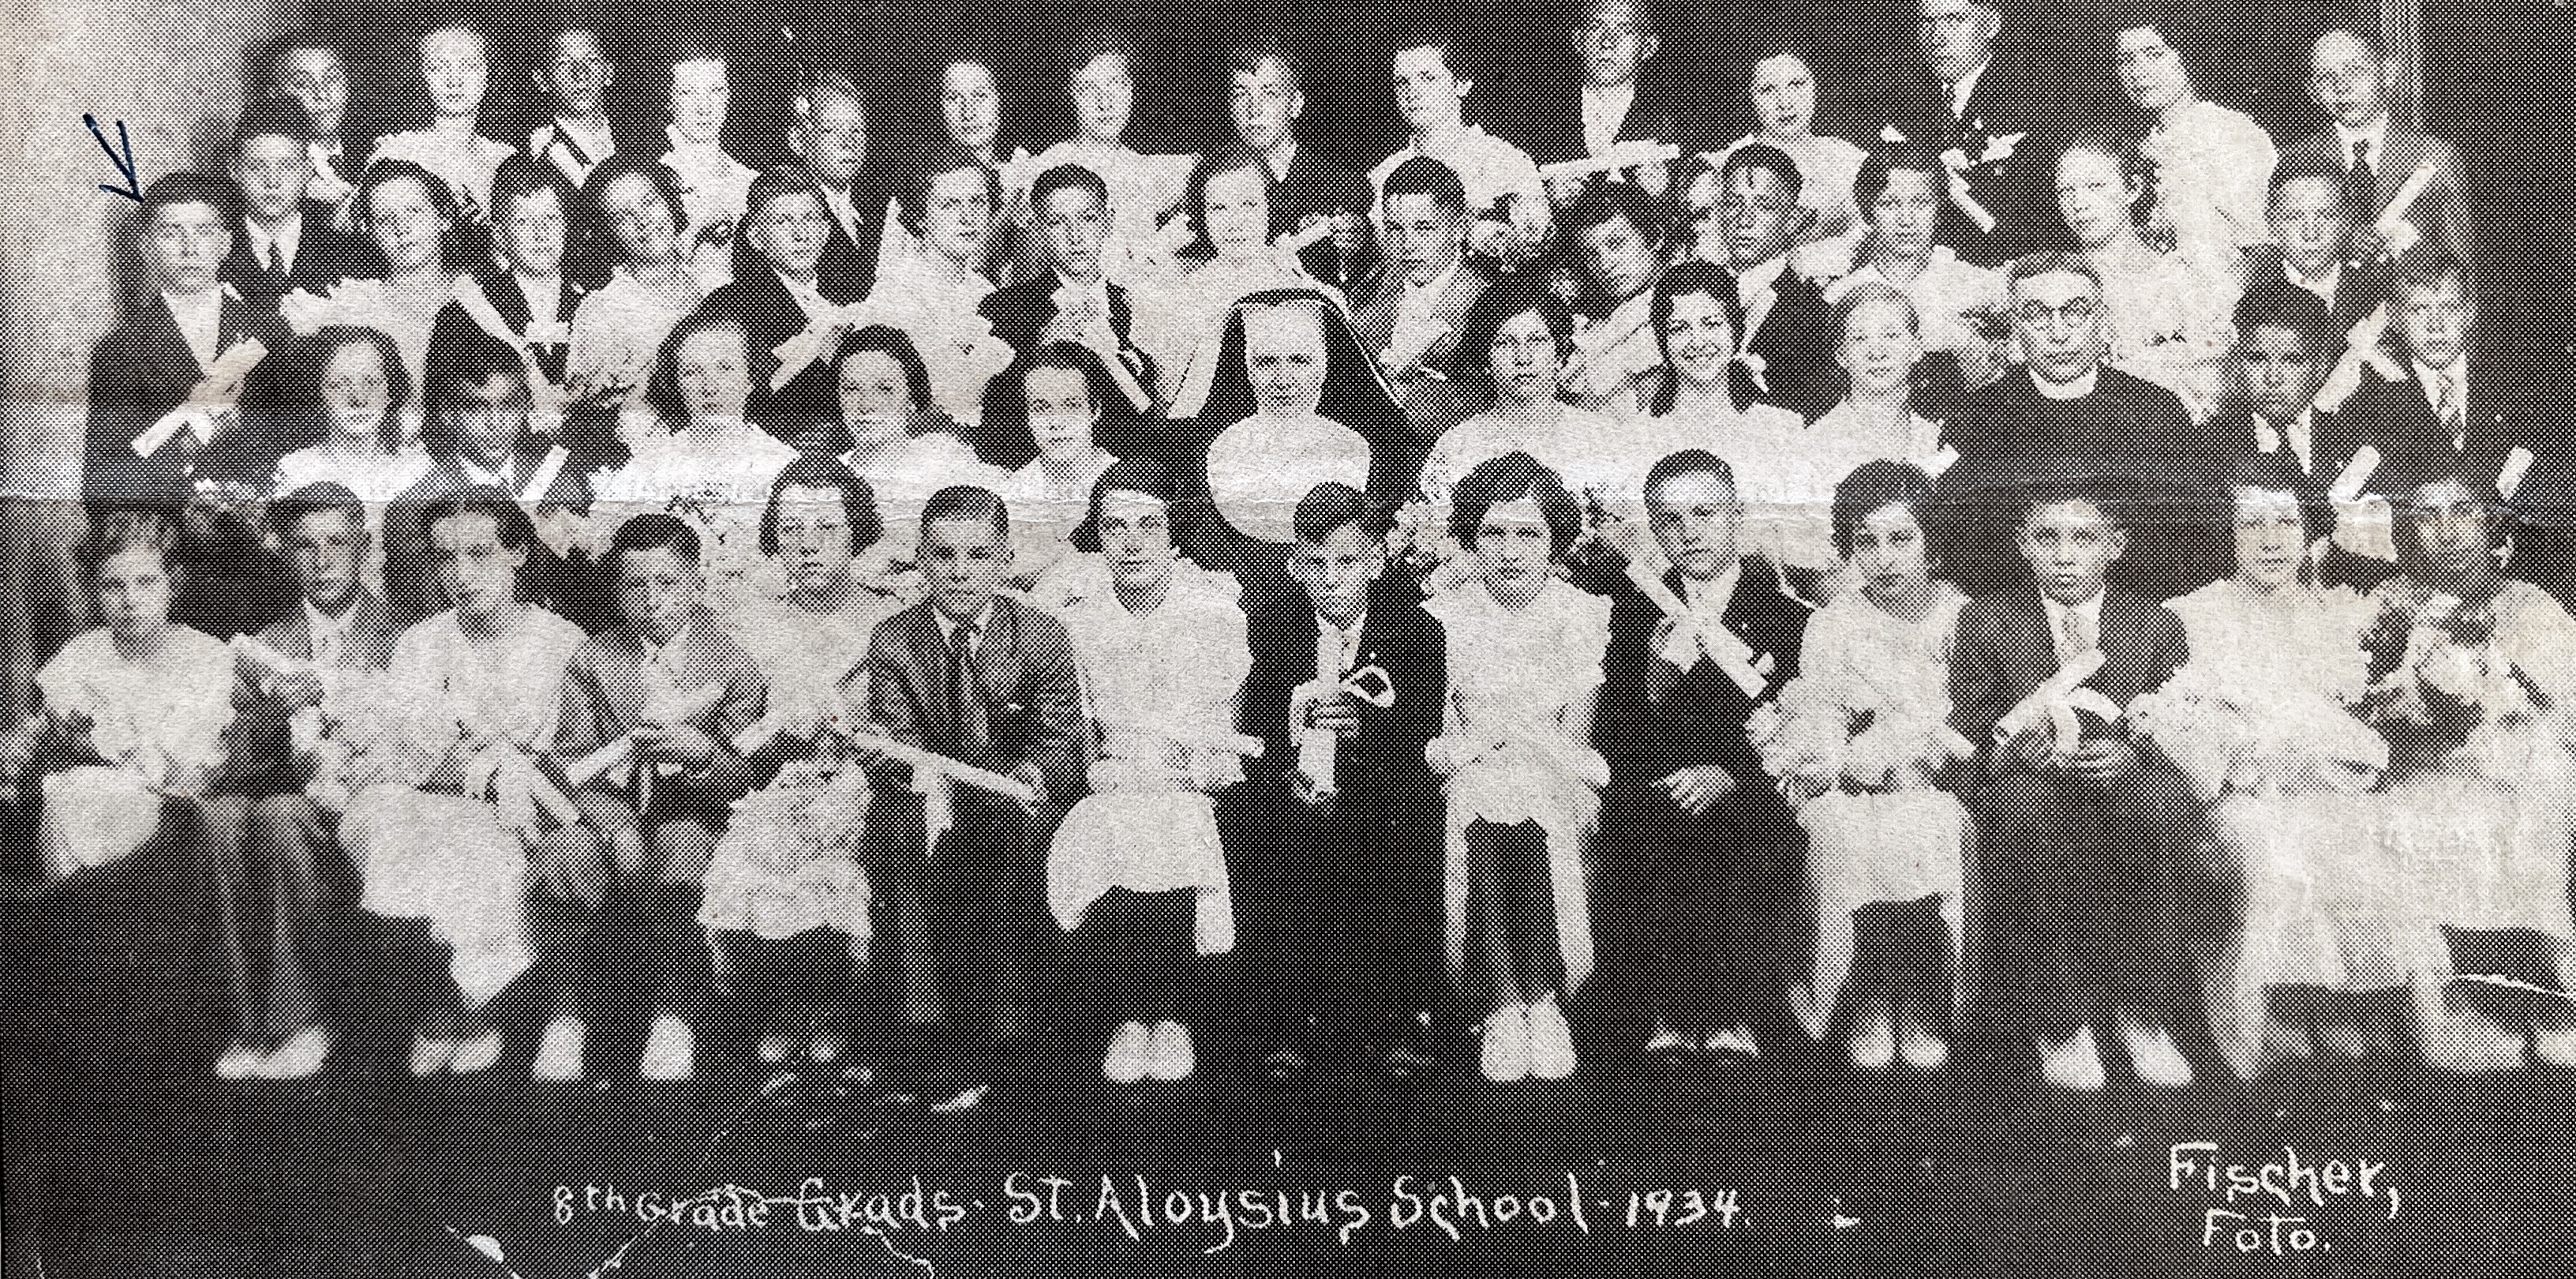 Jim McGowan’s 8th grade class at St. Aloysius. 1934